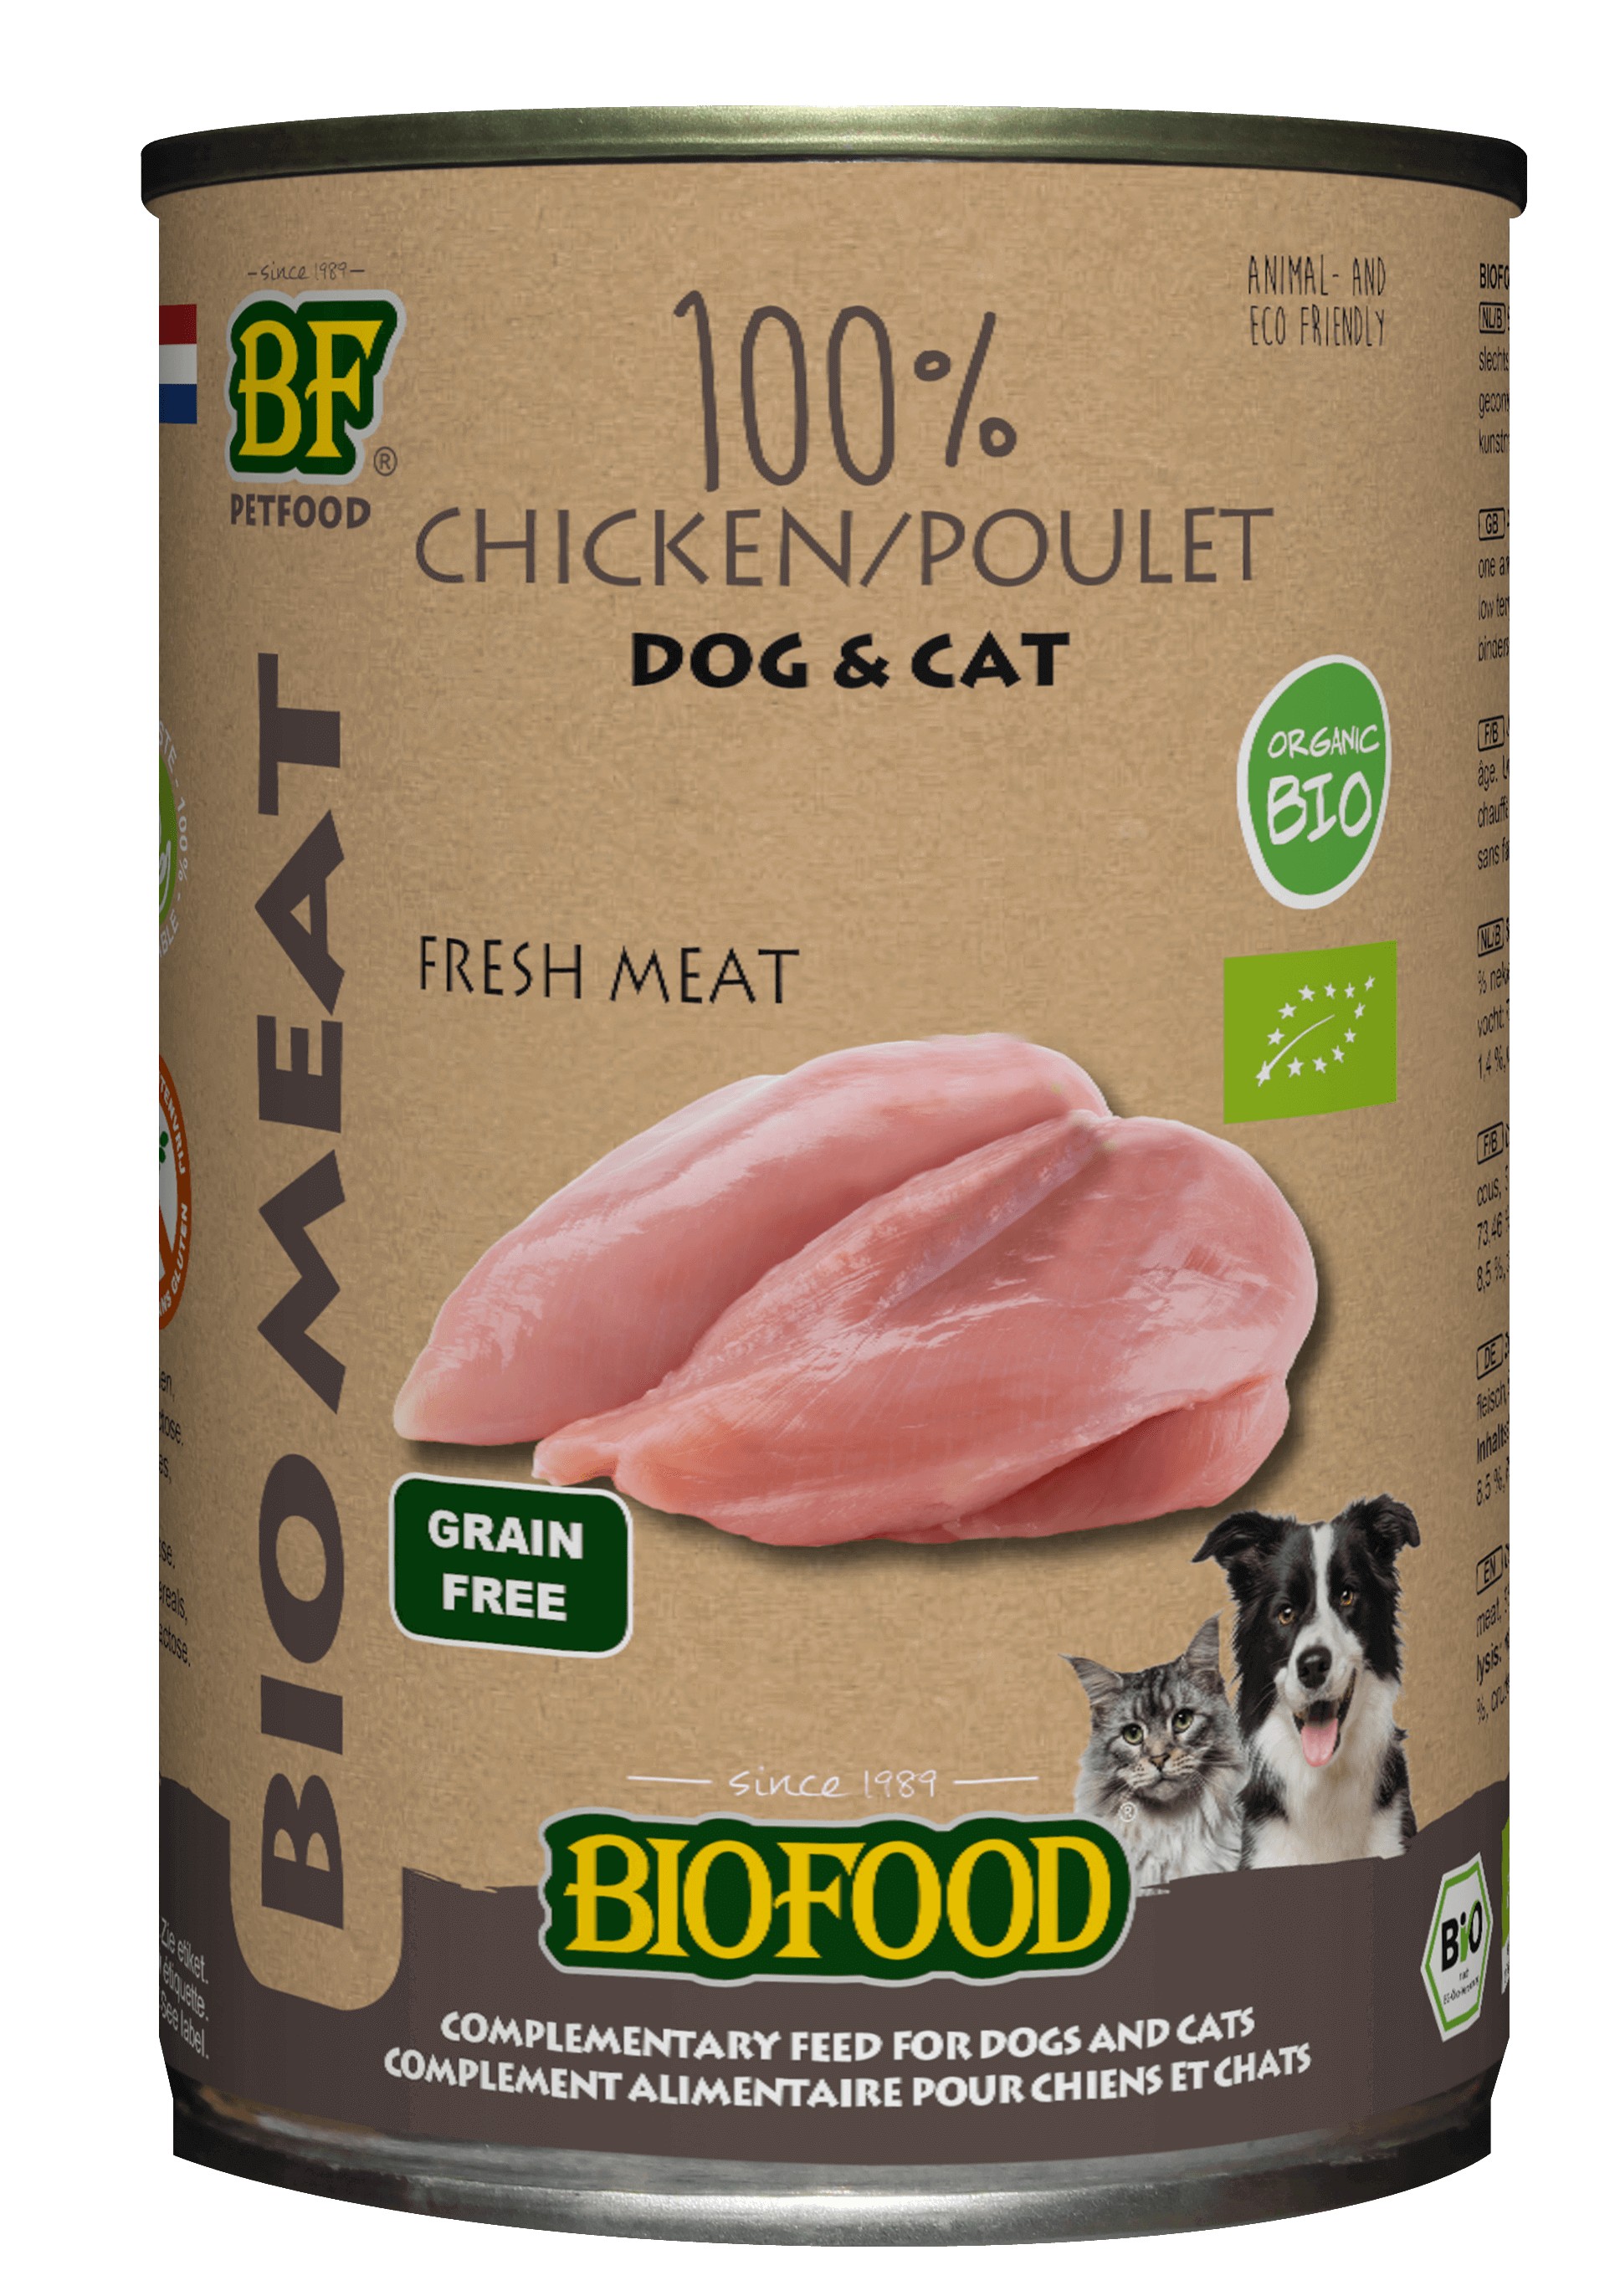 Afbeelding van 12x 400 g BF Petfood Biofood Organic 100% kippenvlees natvoer hond & kat (blik 400 g)